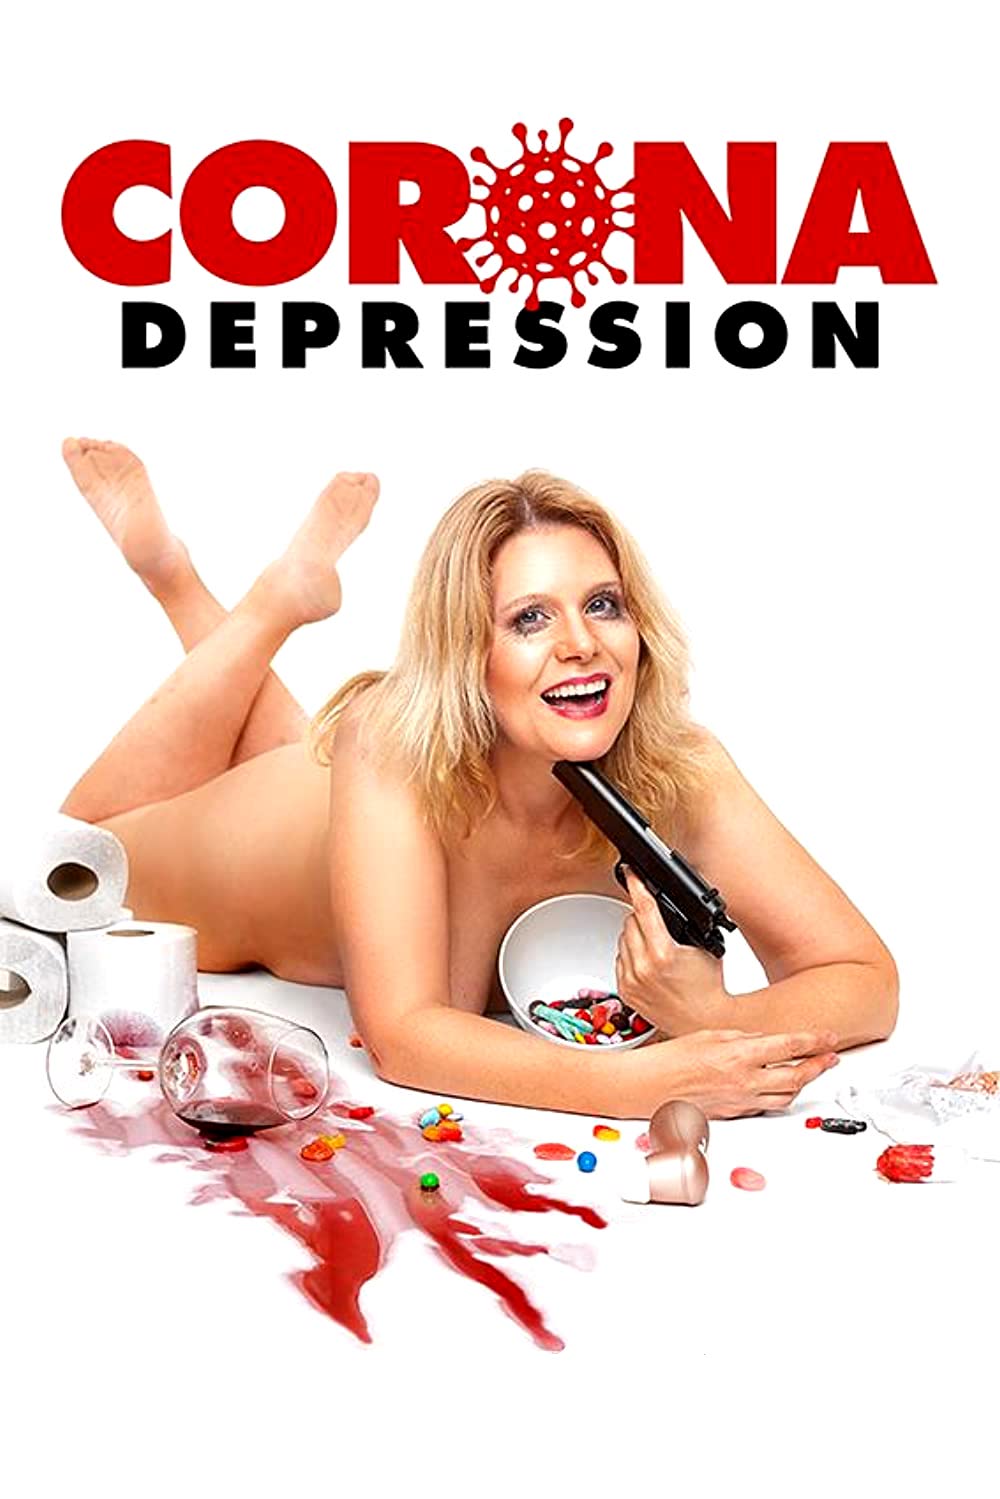 Corona Depression [HD] (2020)